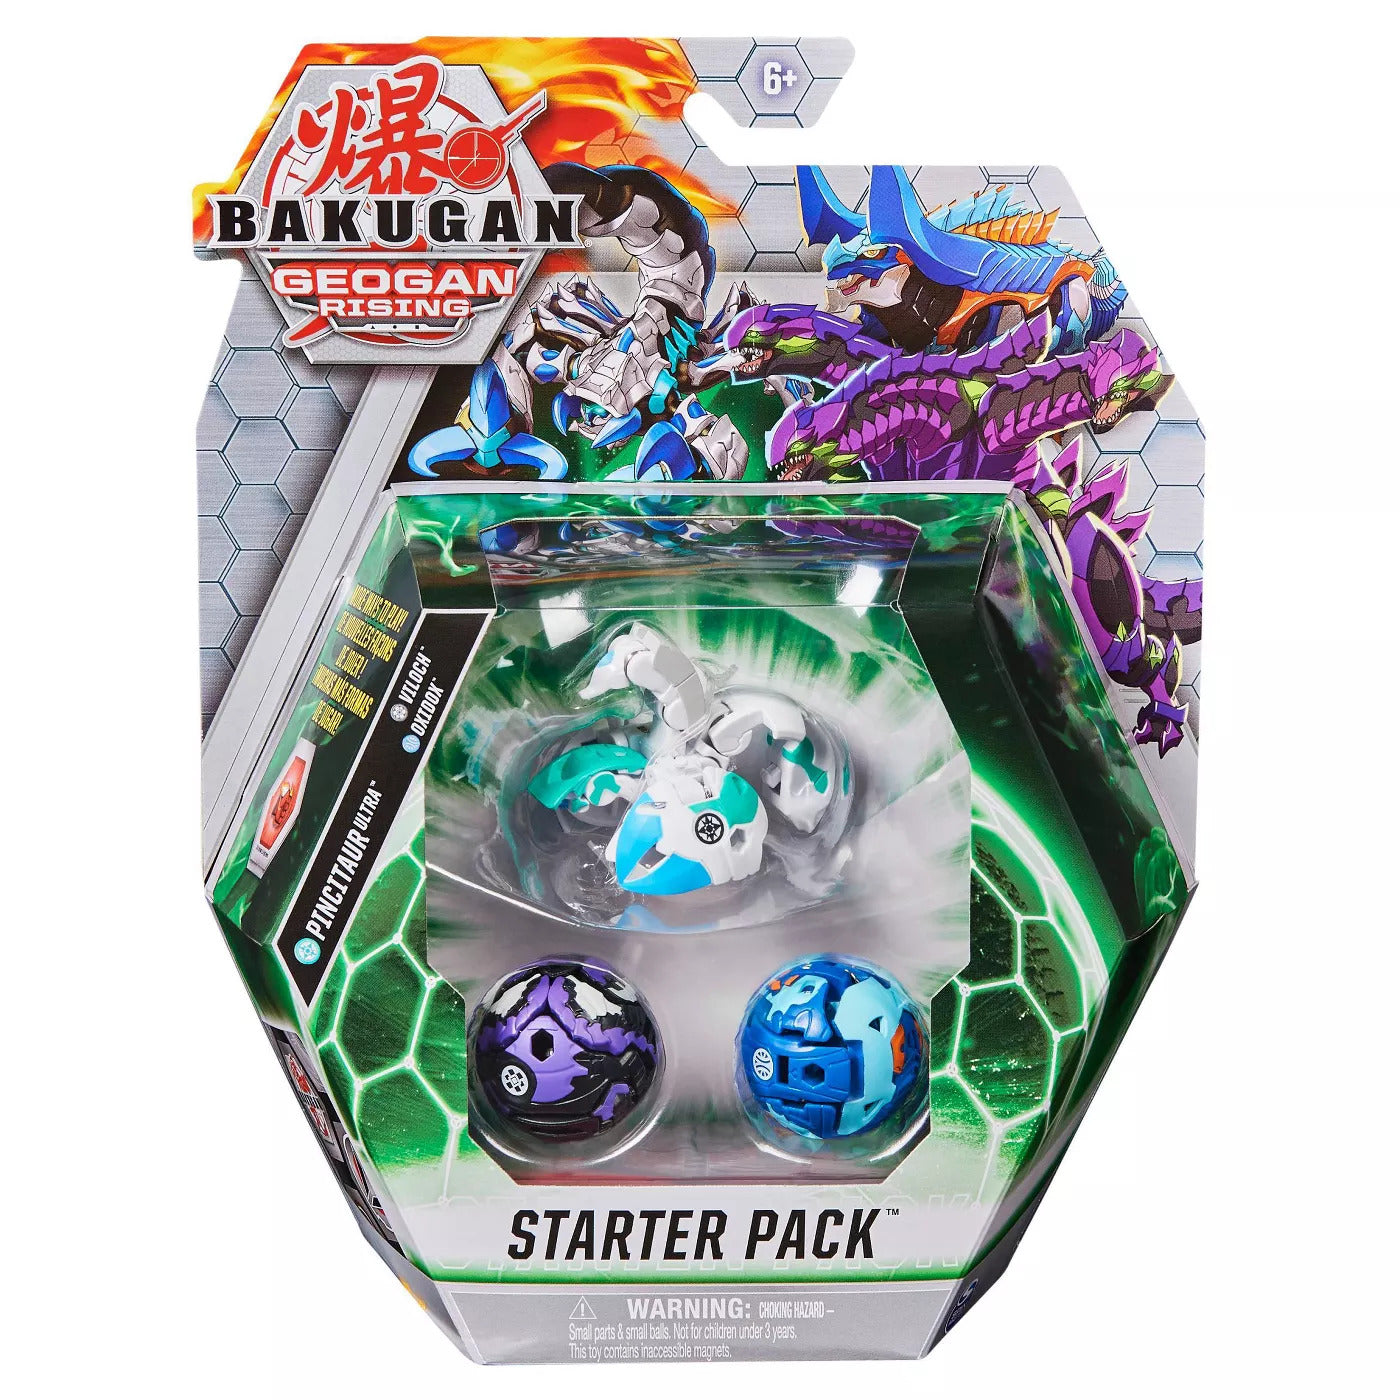 Bakugan Geogan Rising Starter Pack - Pincitaur Ultra Viloch Oxidox